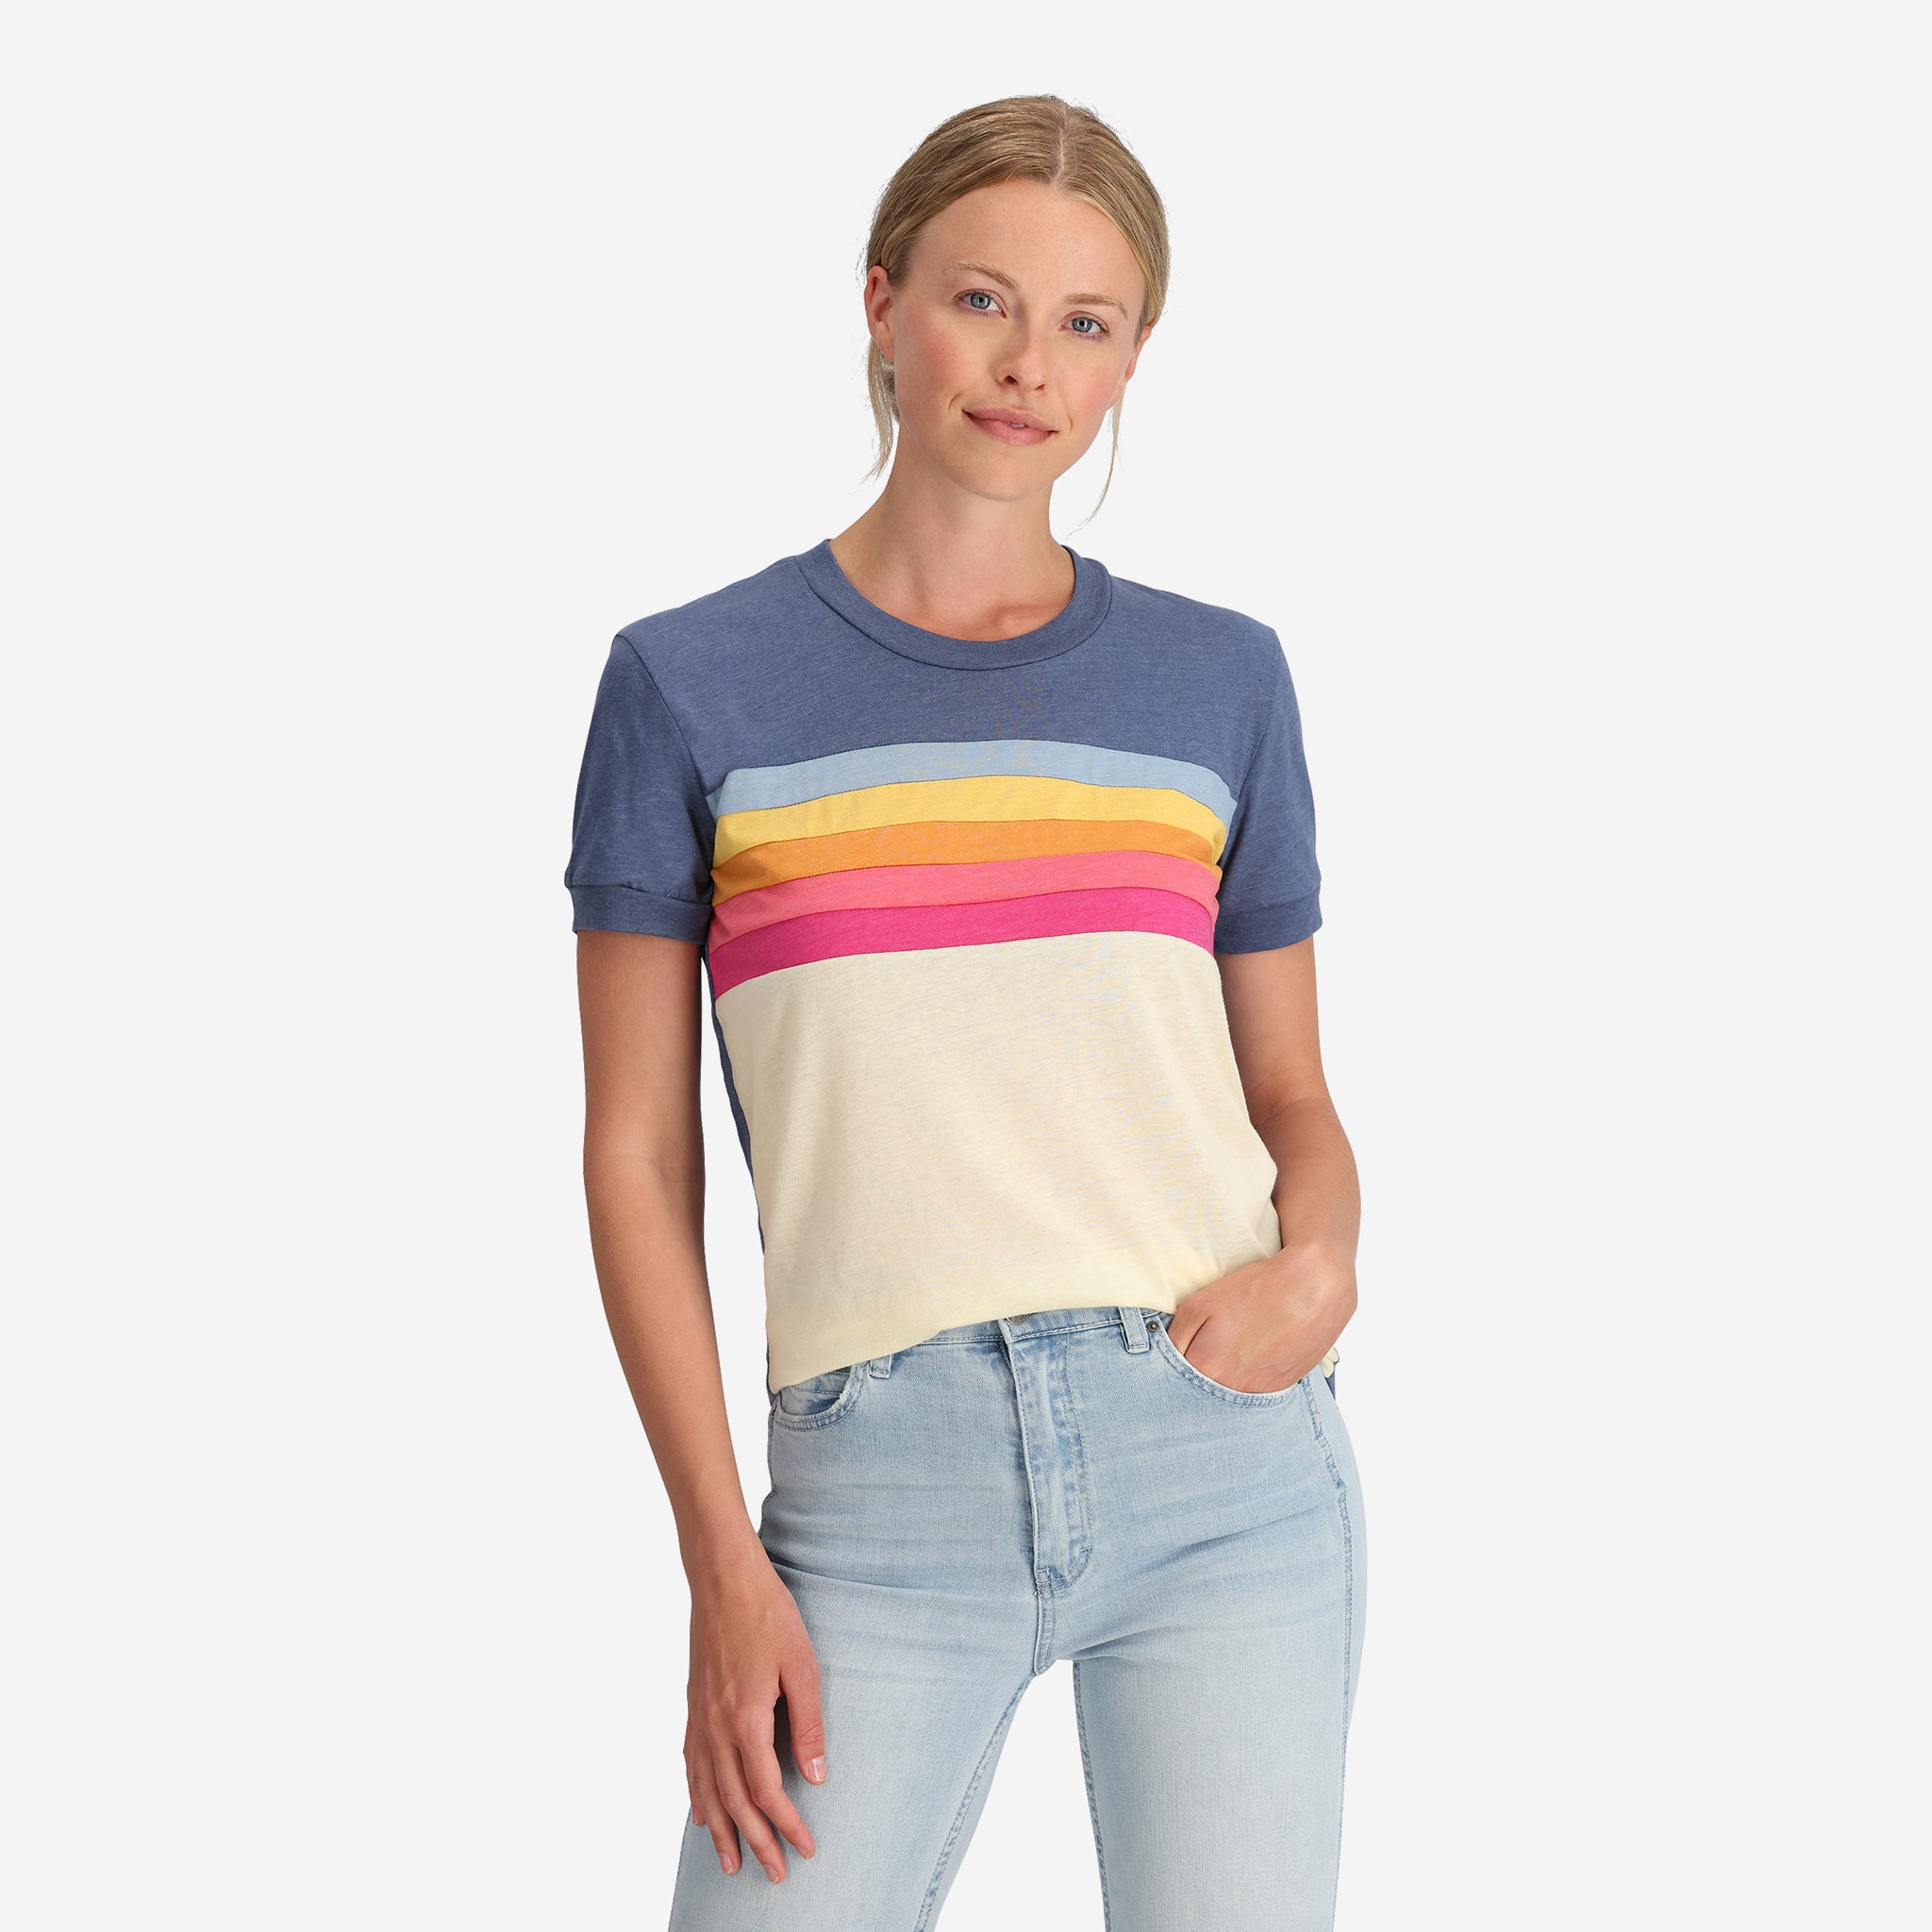 Zoey's Attic Gay Pride Rainbow Watercolor Mandala Unisex Tshirt